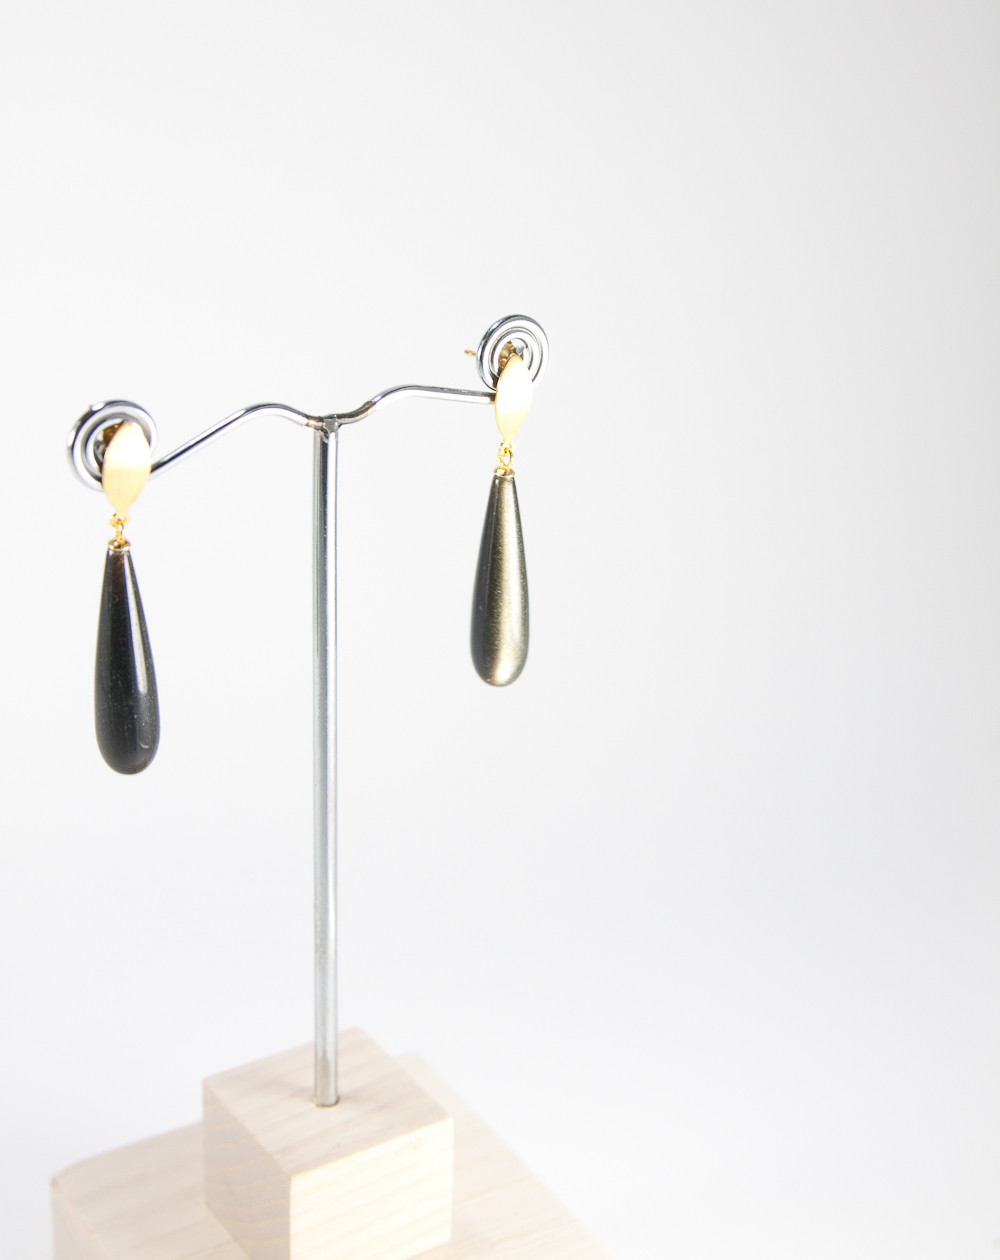 Boucles d'oreilles en Obsidienne dorée, Sanùk Création. Bayonne, France